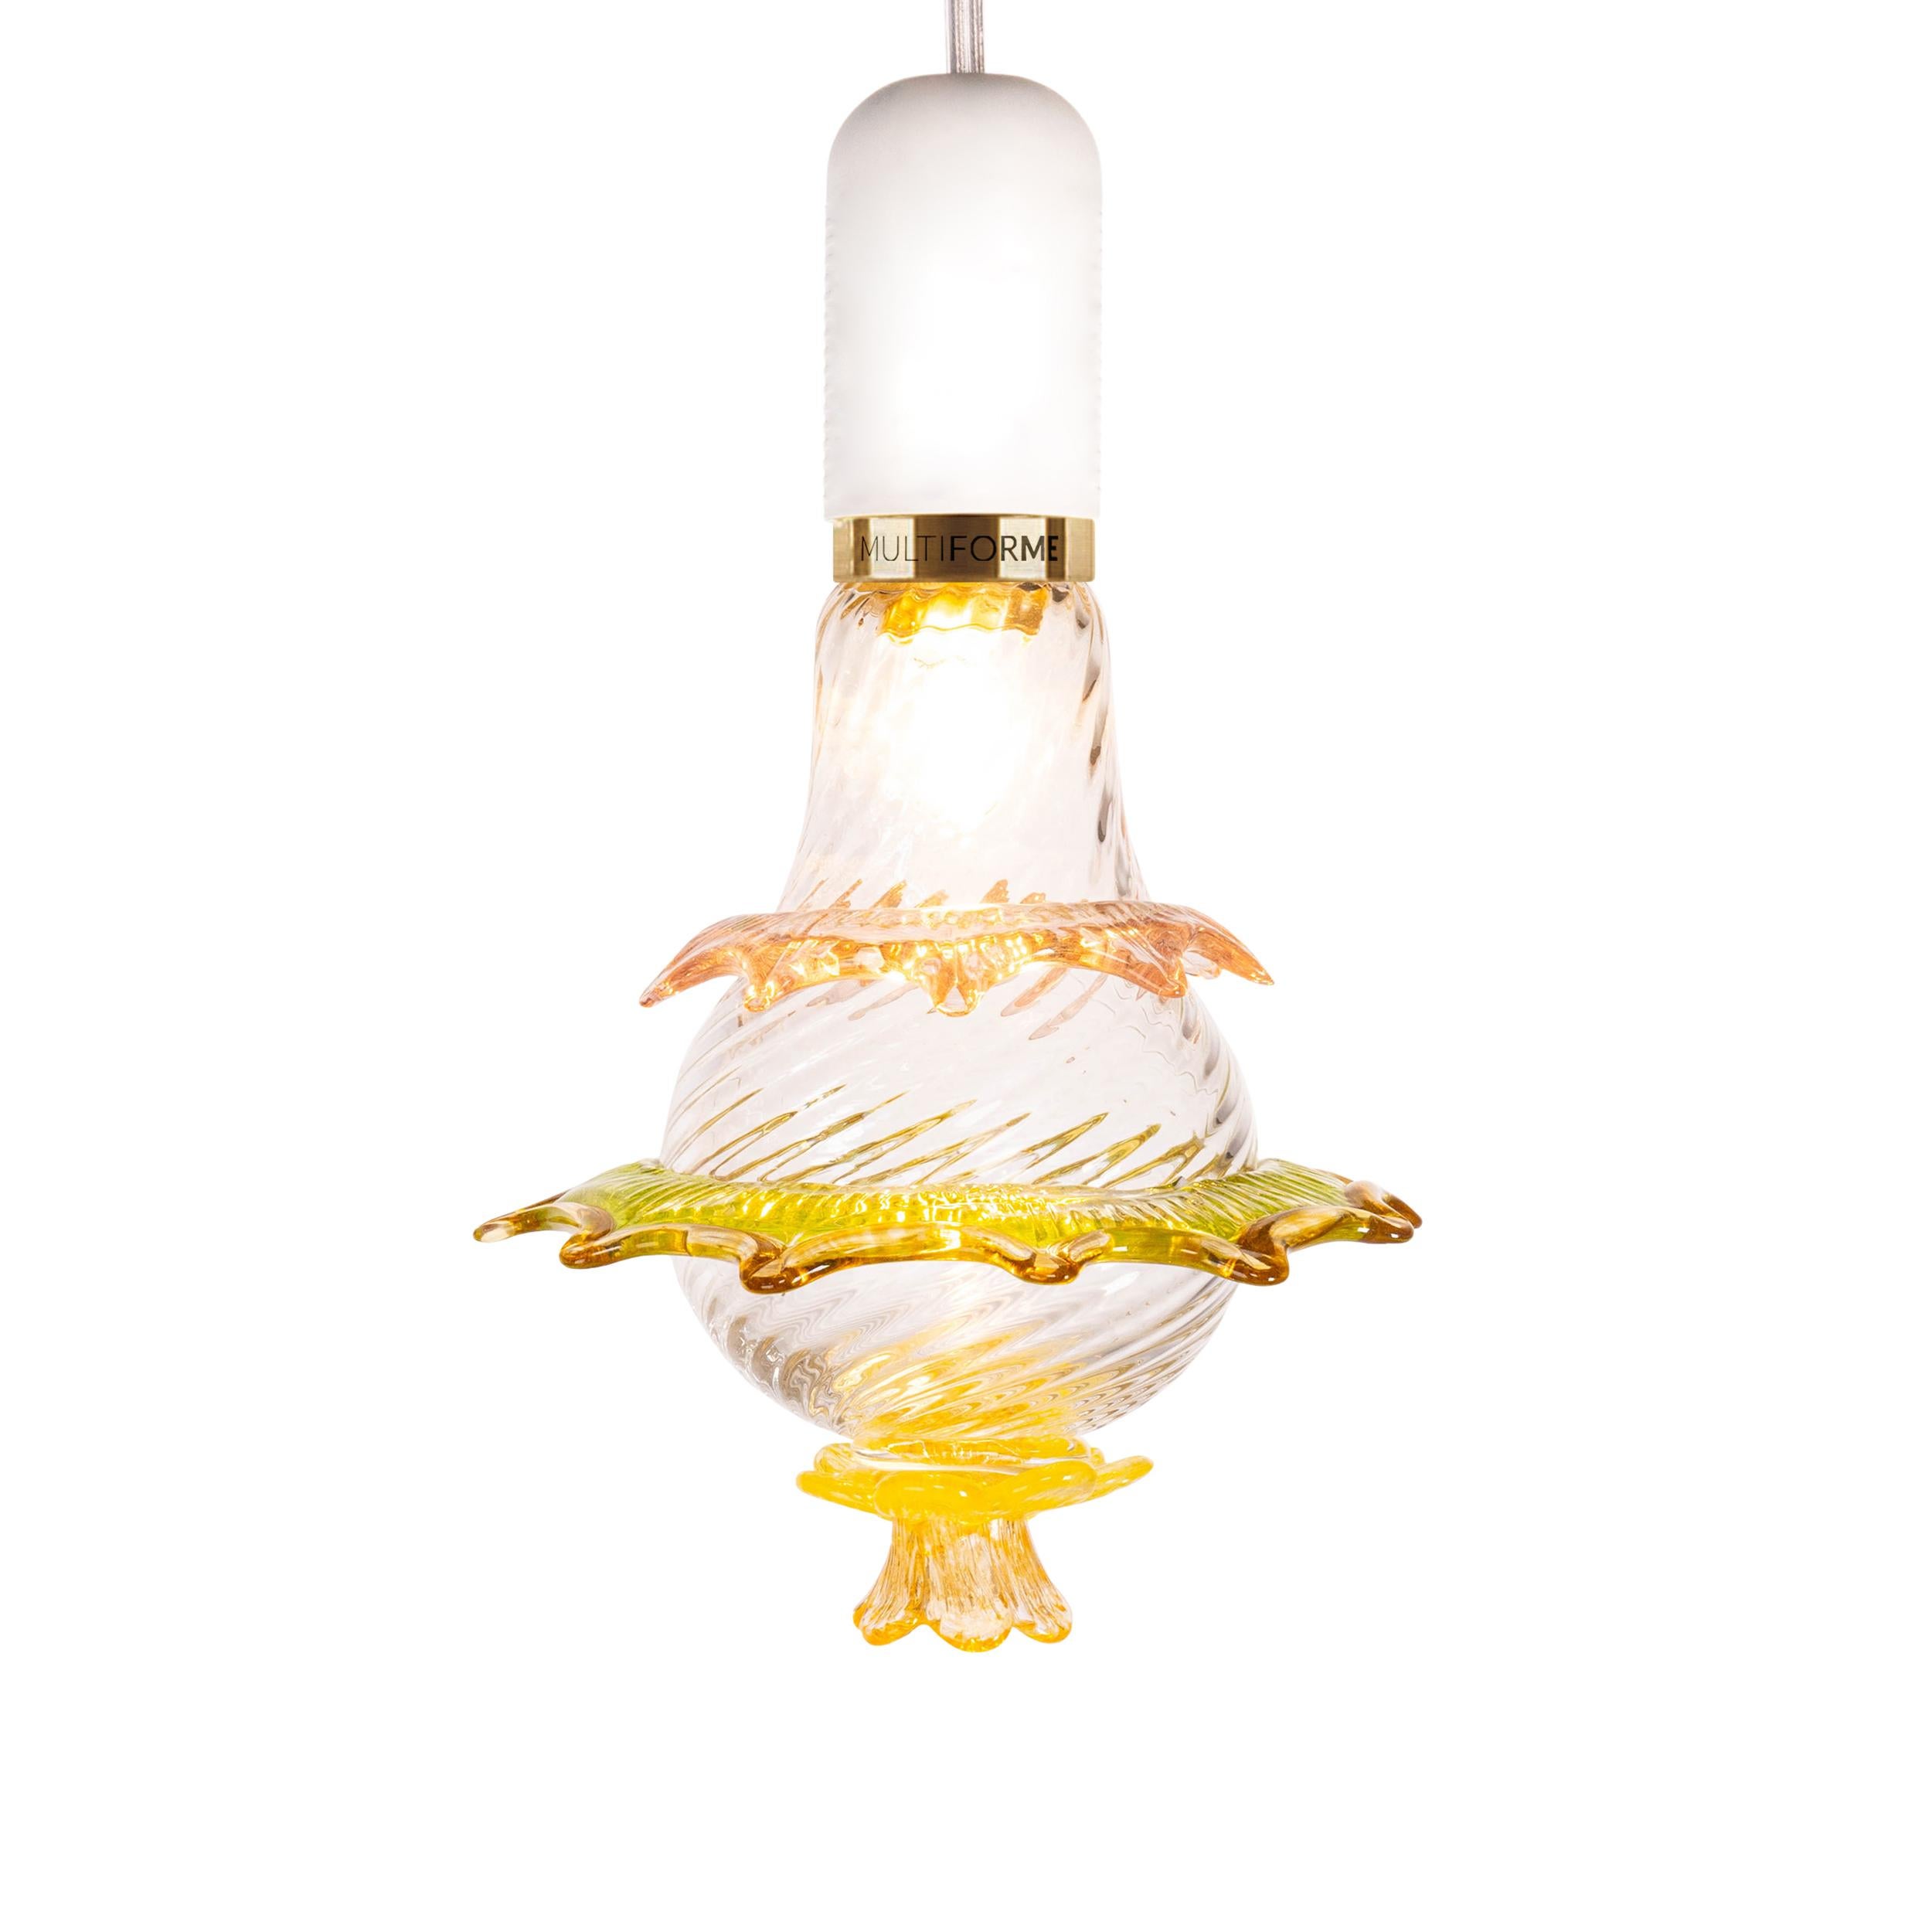 Artistic glass lightbulb chandelier Murano Bulb Marcantonio X Multiforme #04 In New Condition For Sale In Trebaseleghe, IT